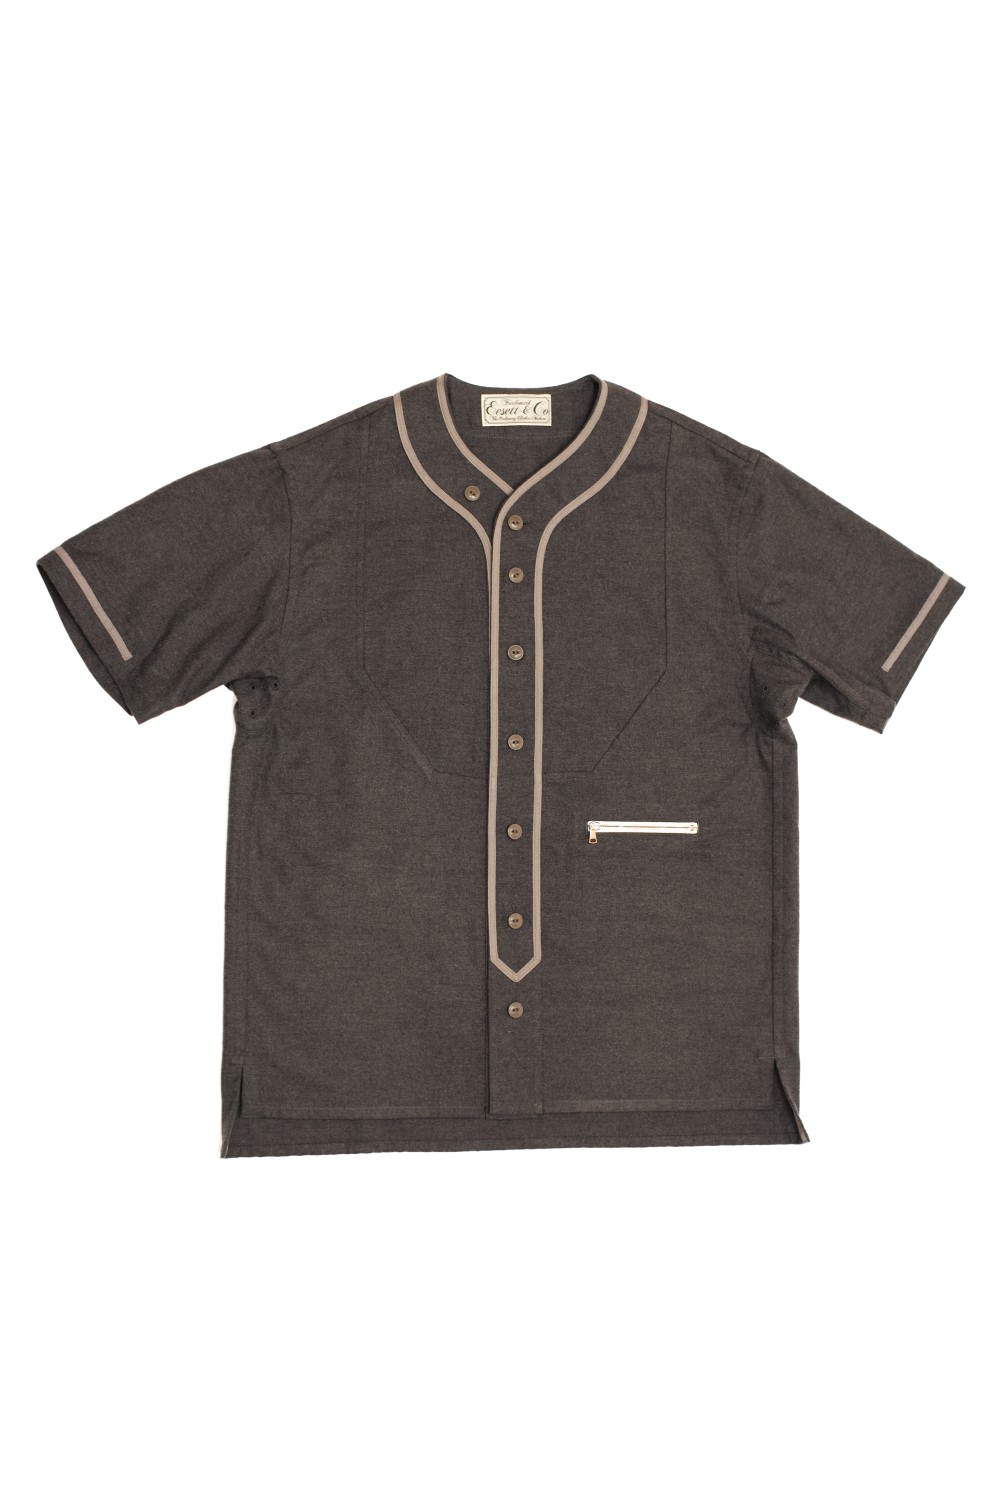 baseball shirt charcoal grey